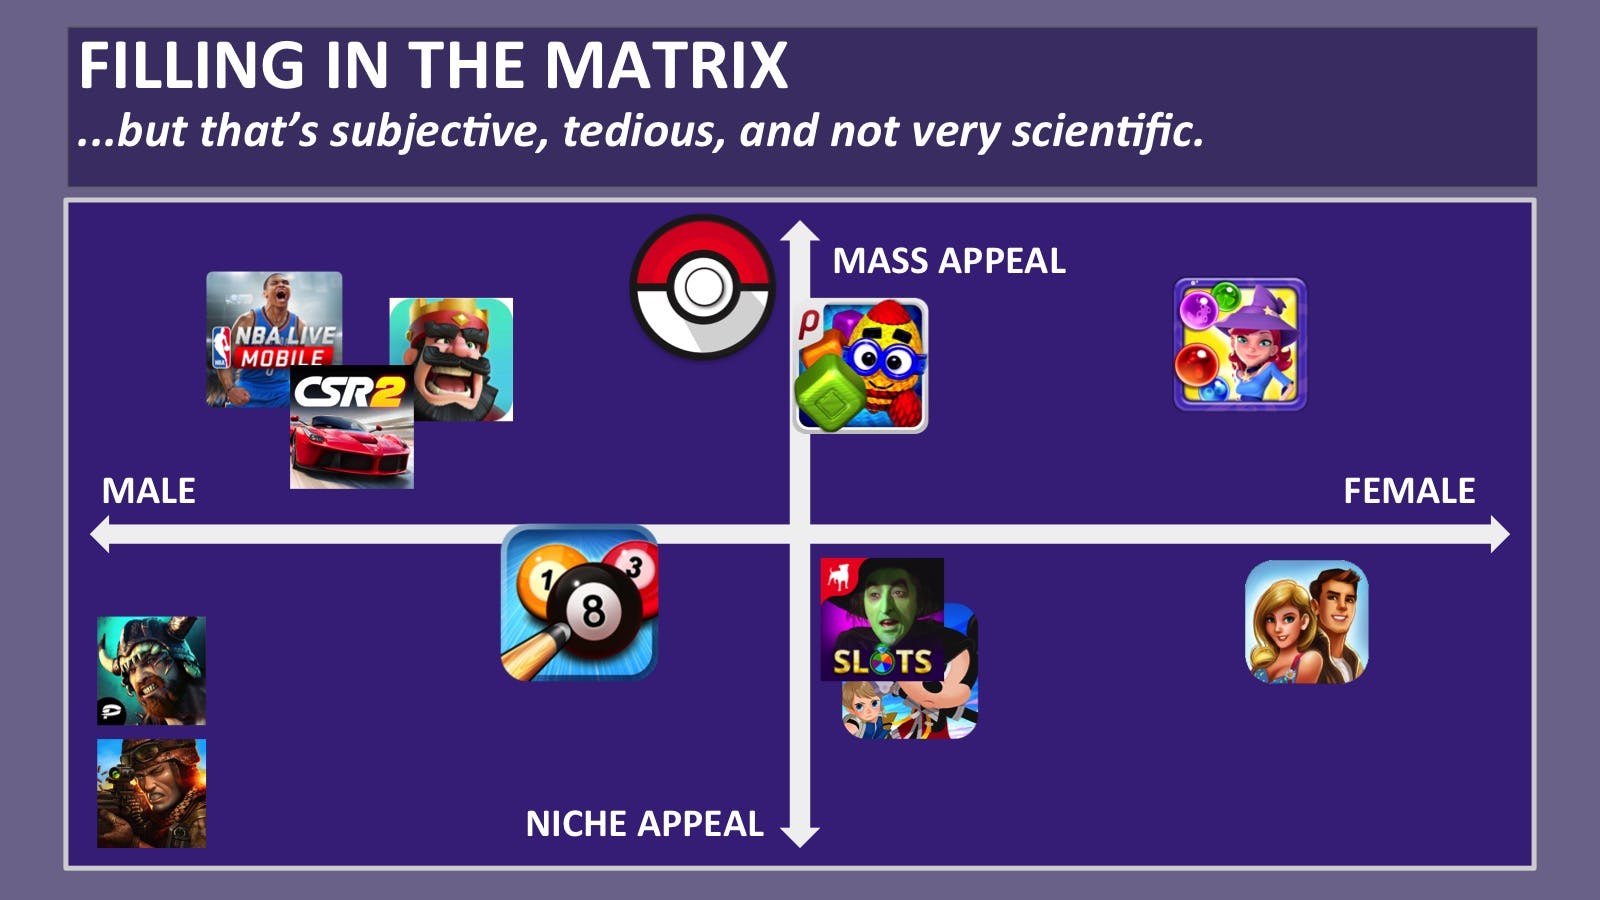 Appeal matrix of trending mobile games